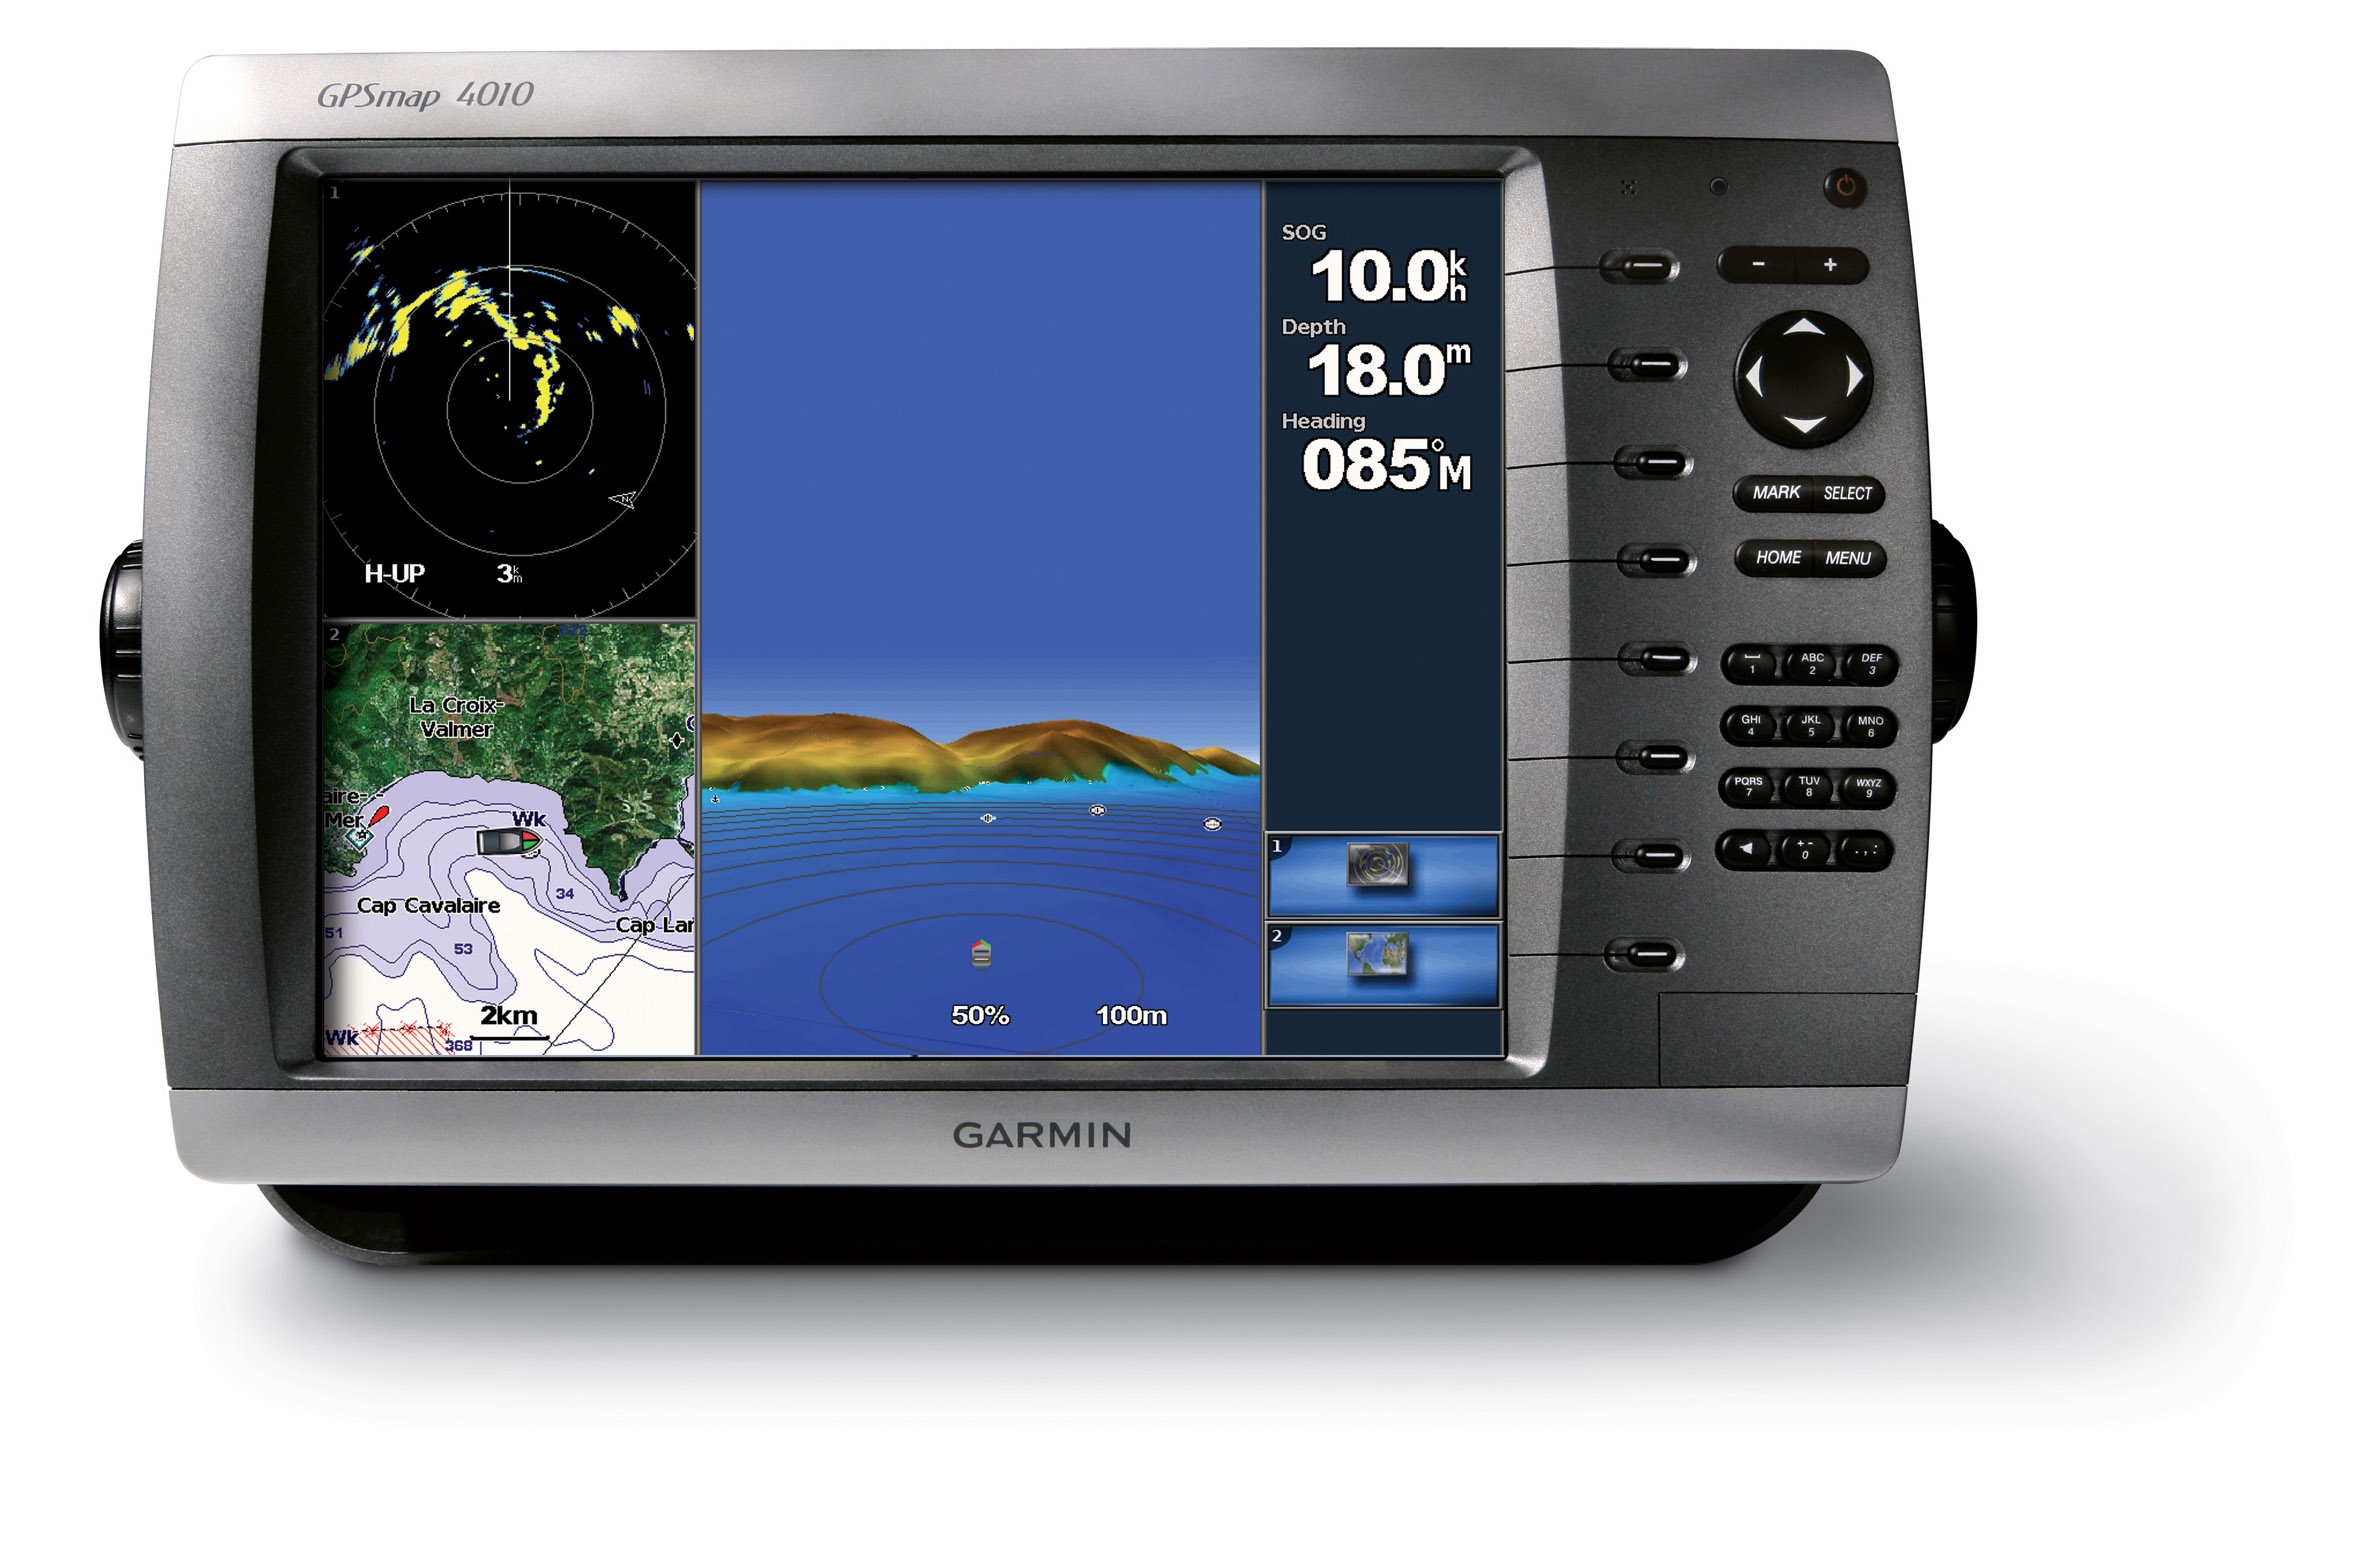 Garmin GPS 4010